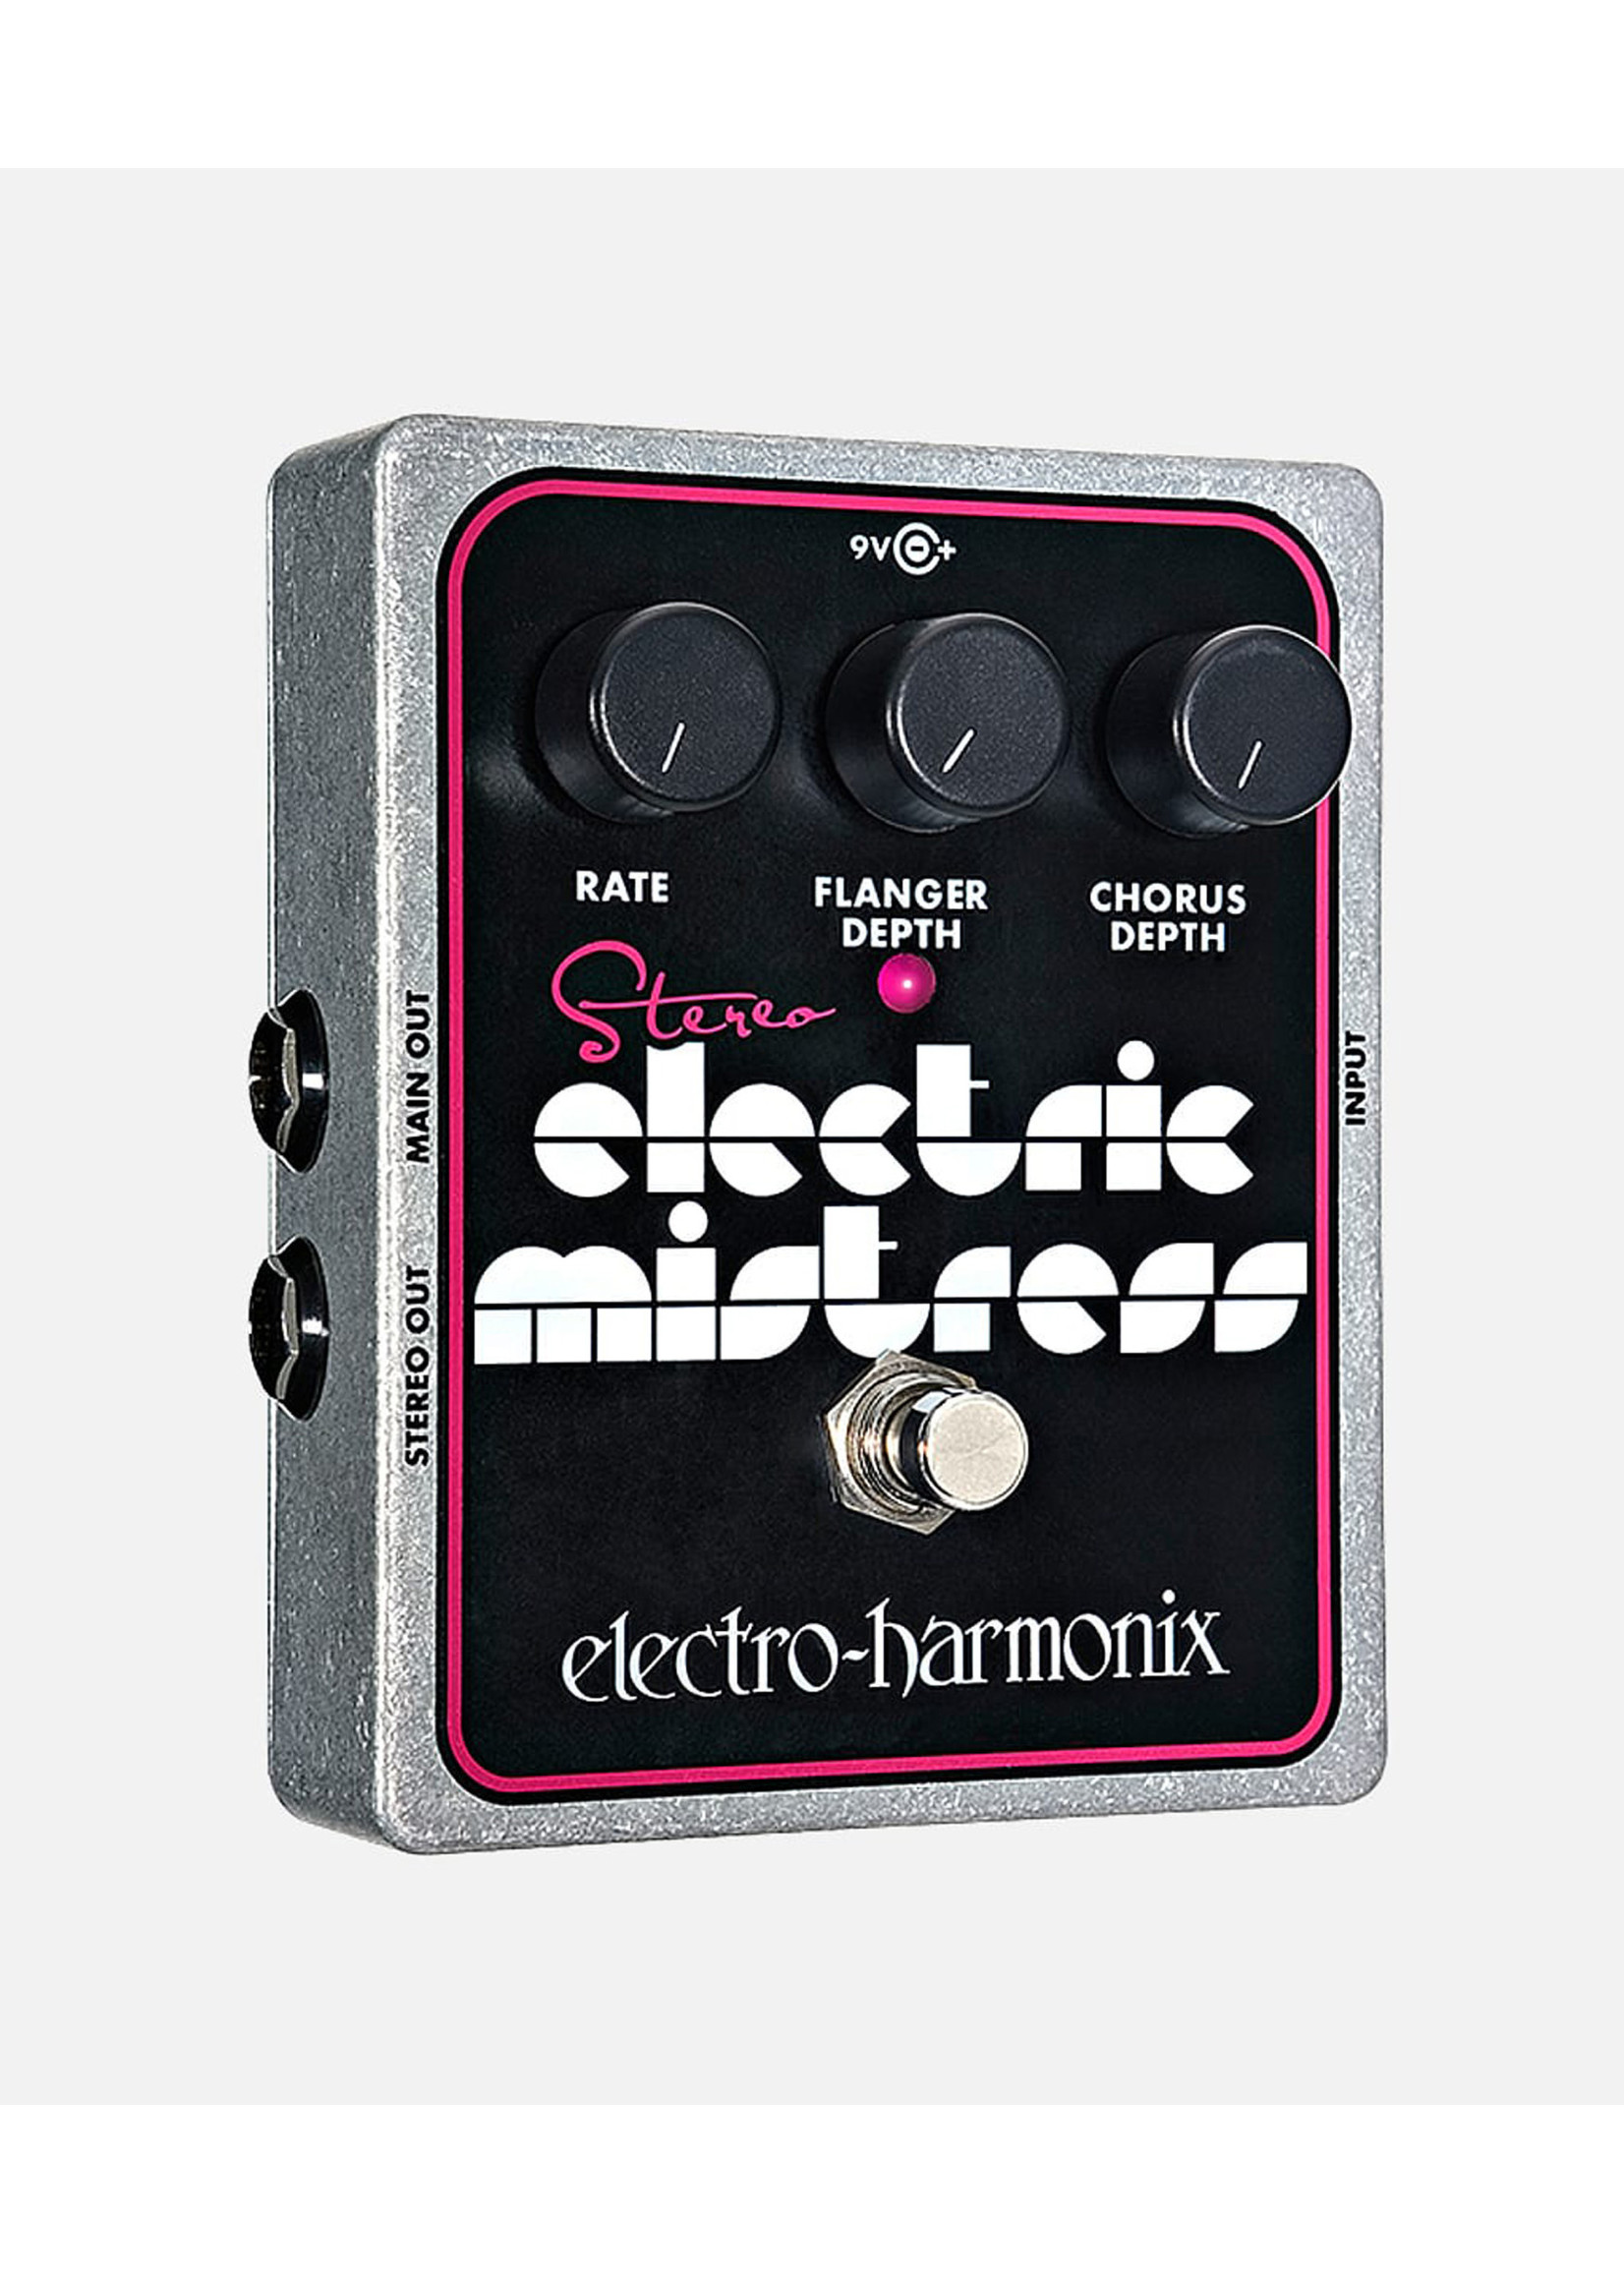 Electro Harmonix EHX Stereo Electric Mistress